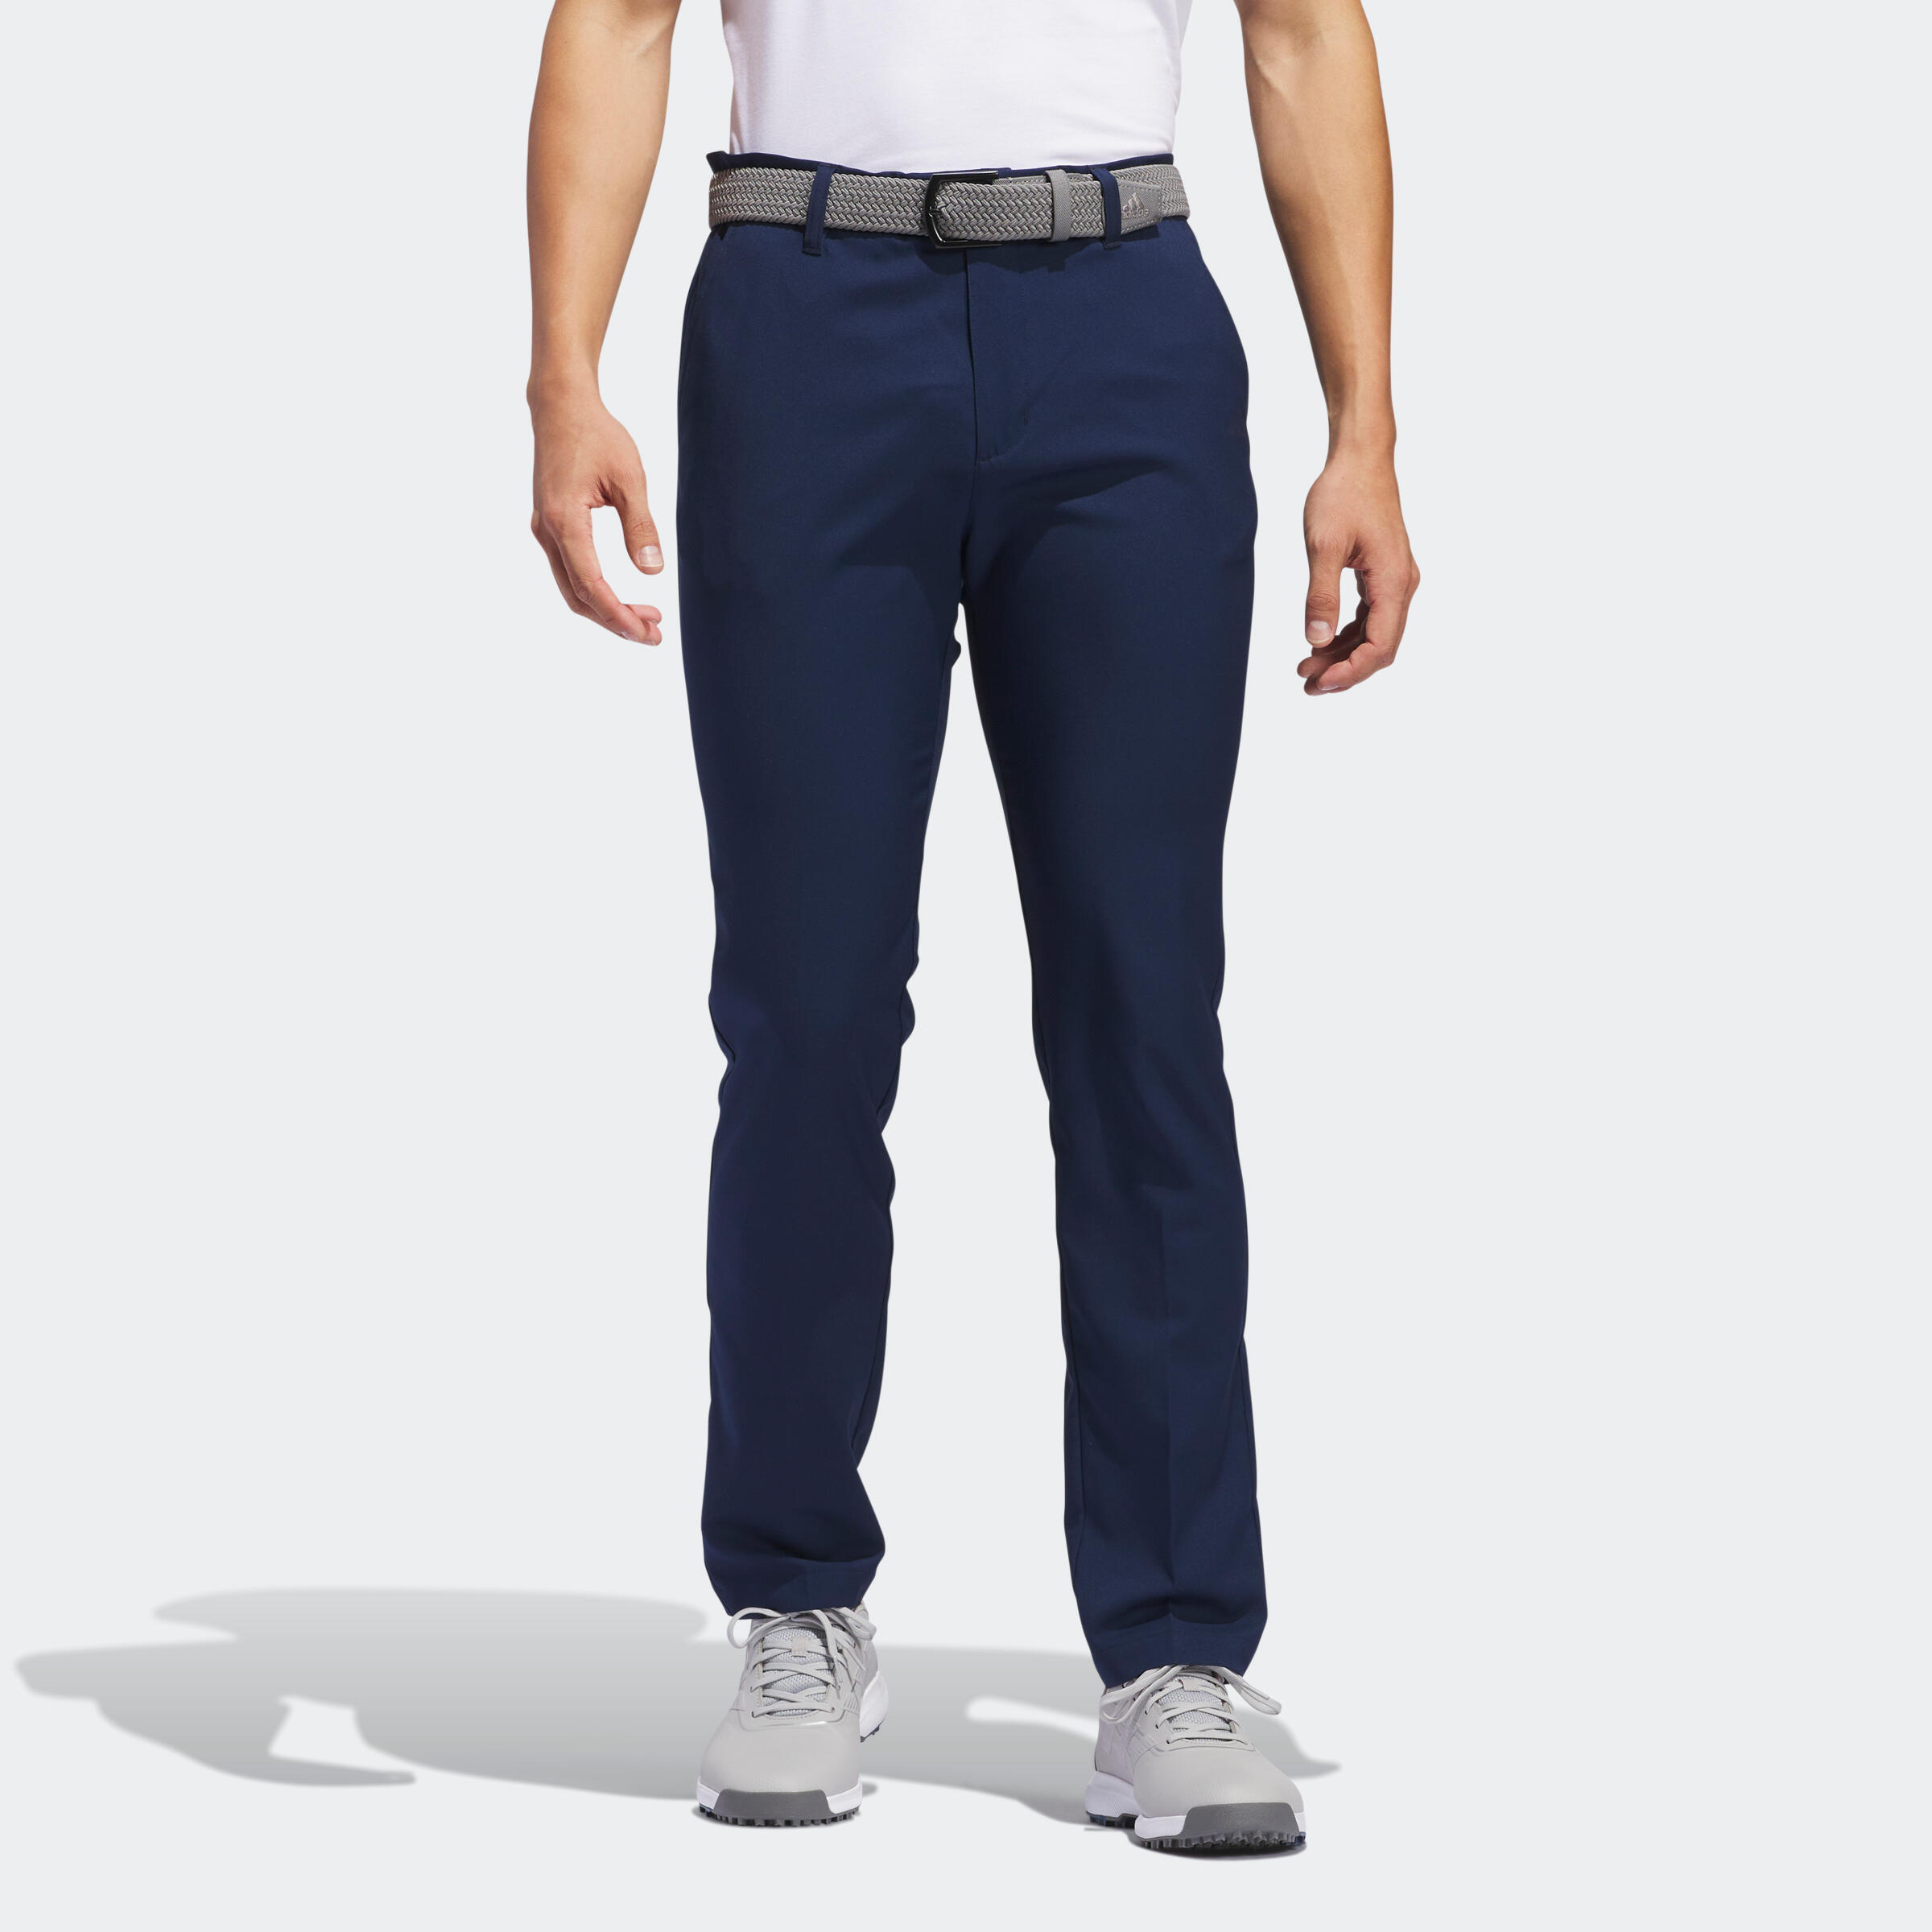 Men's golf trousers - Adidas navy blue 2/4